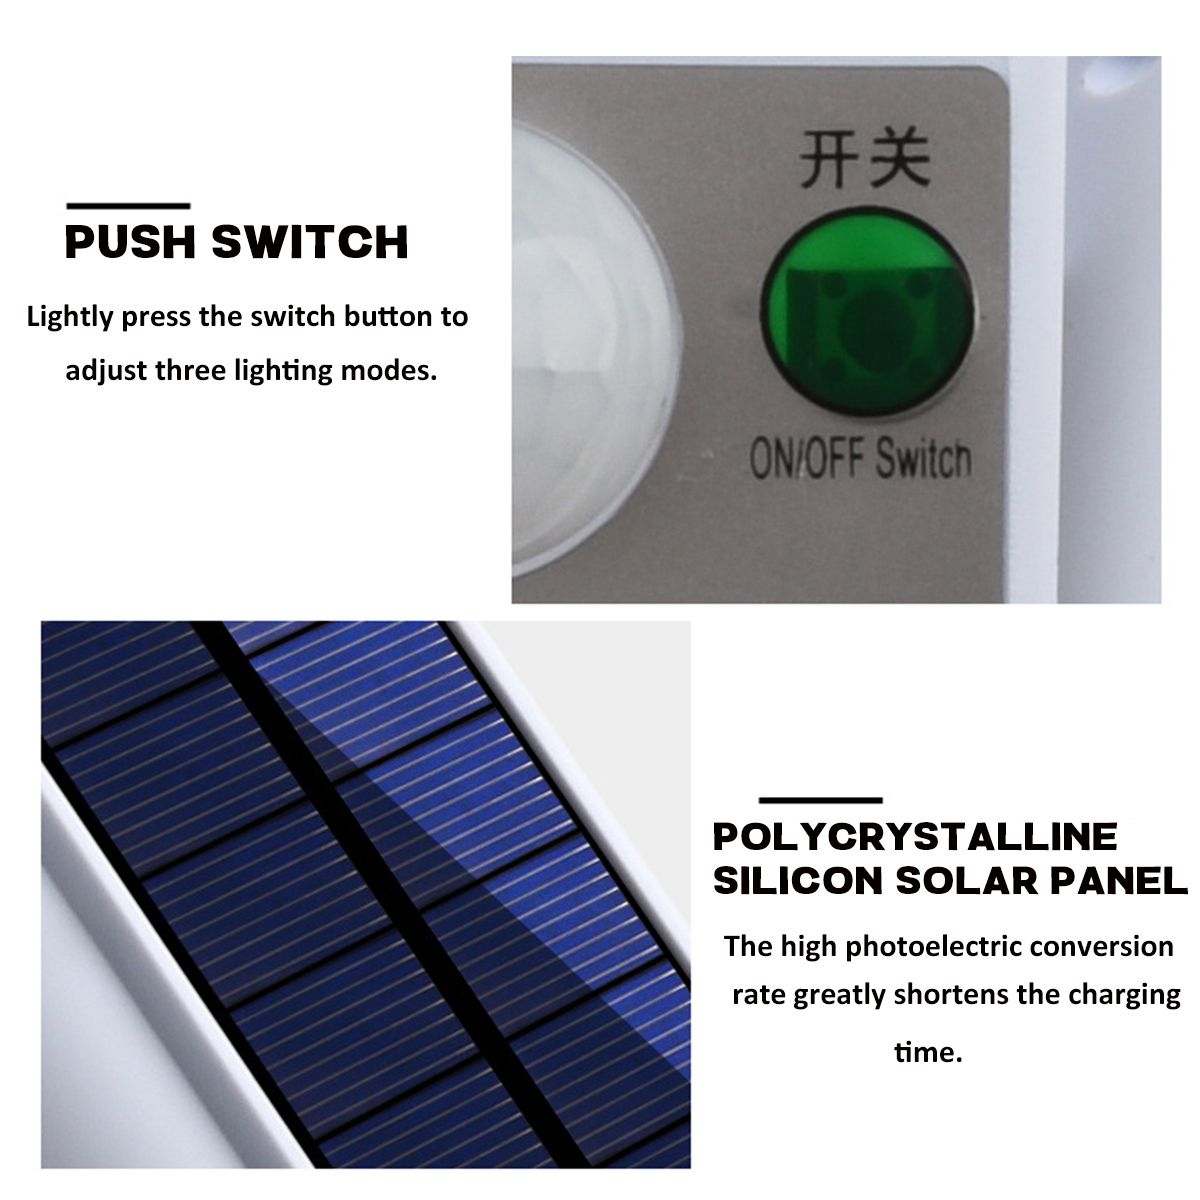 12Pcs-77LED-Solar-Powered-PIR-Motion-Sensor-Light-Outdoor-Garden-Security-Wall-Light-1763054